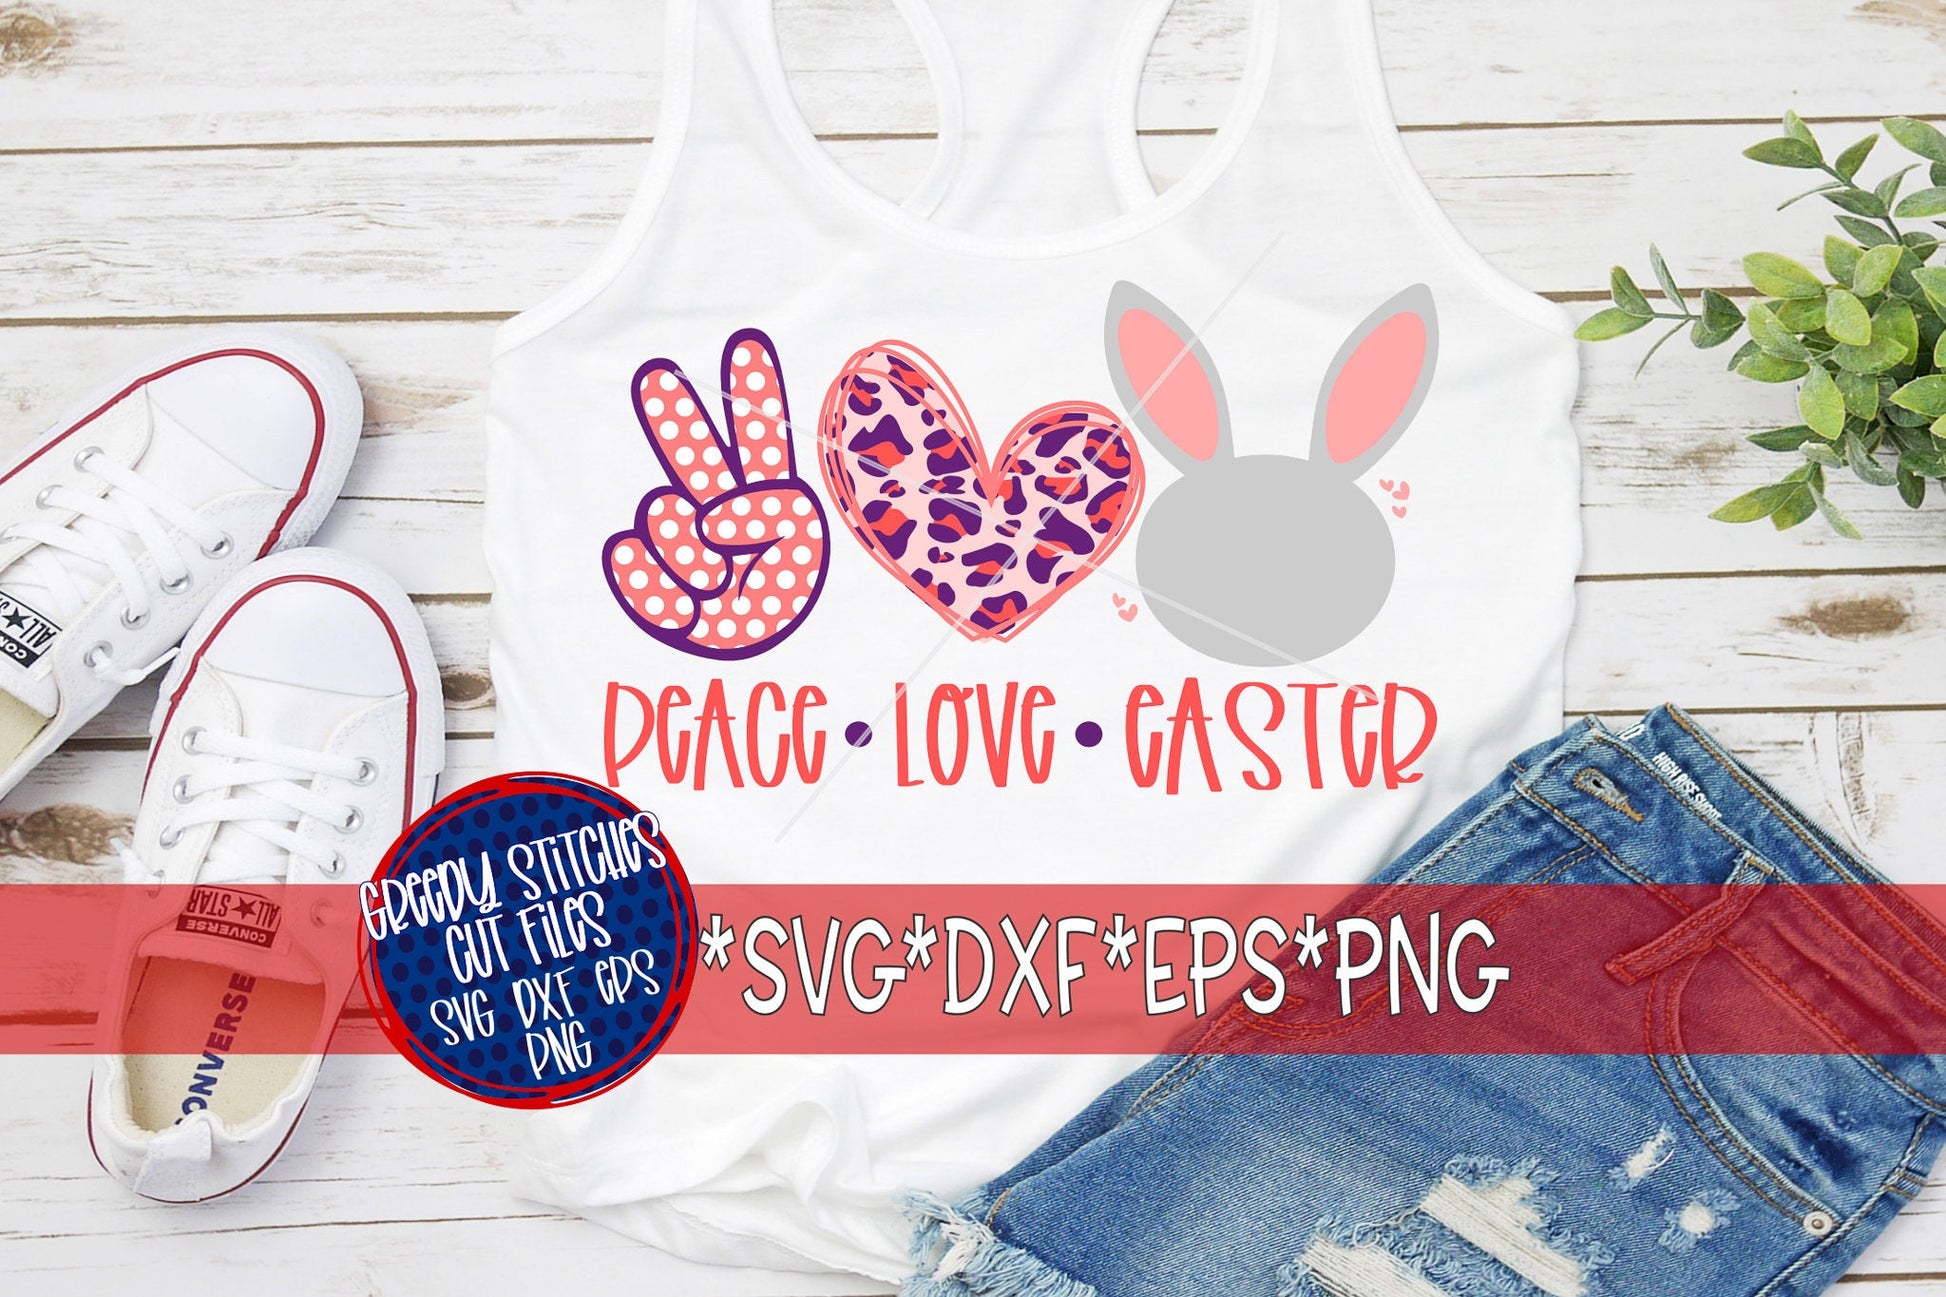 Easter SvG | Peace Love Easter svg, dxf, eps, png. Easter SvG | Easter Bunny SvG | Peace Love SvG | Easter SvG | Instant Download Cut File